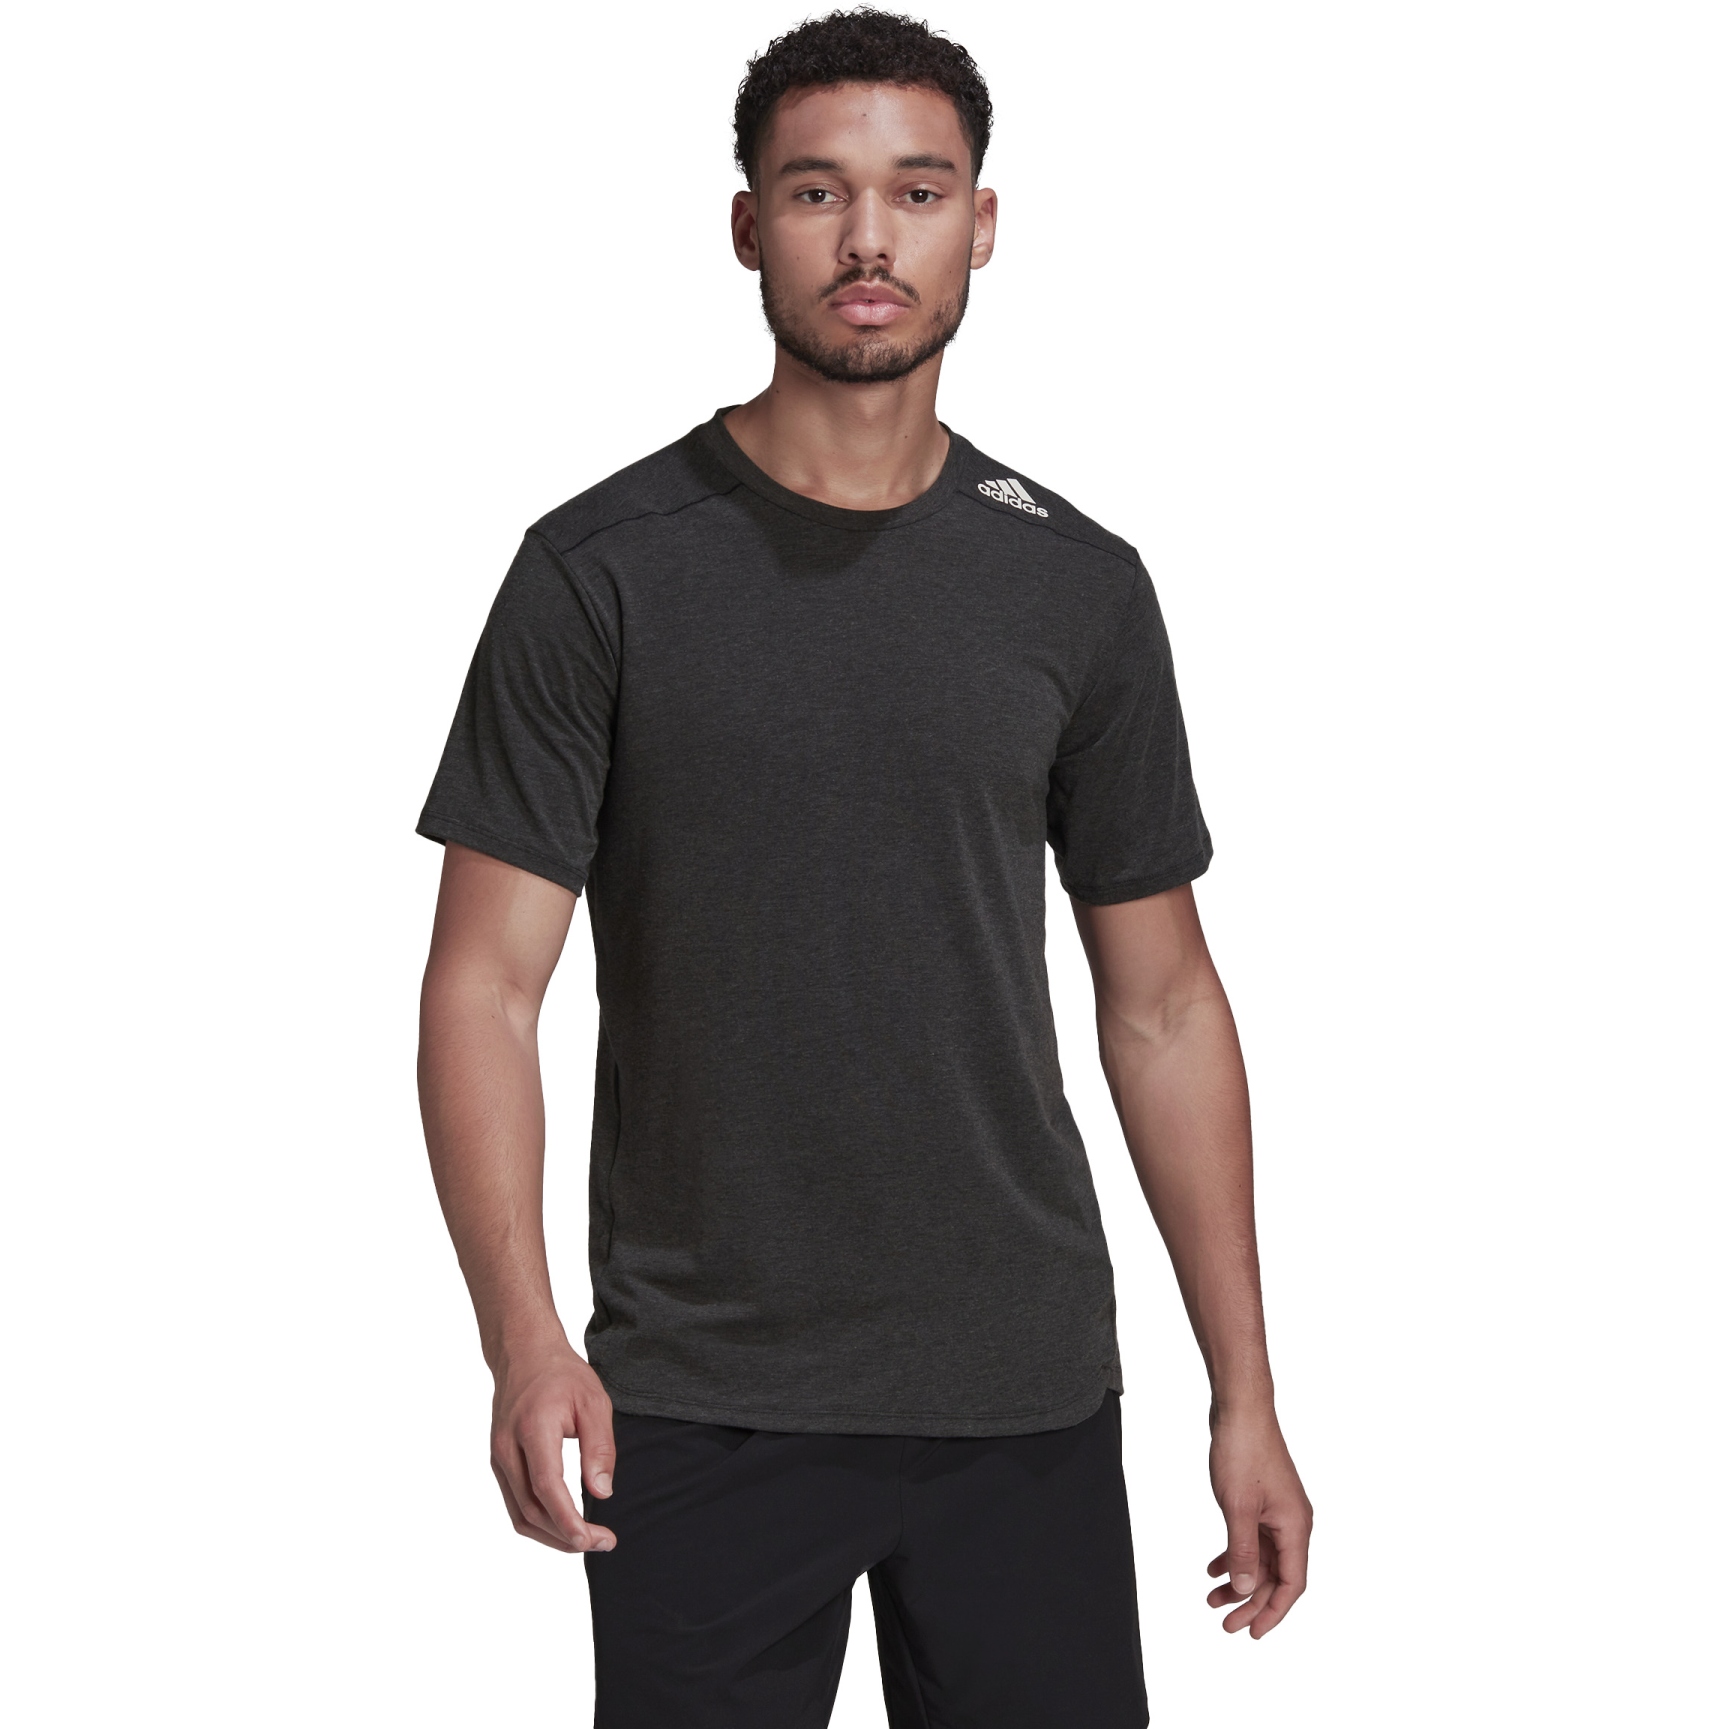 Productfoto van adidas Designed for Training Shirt Heren - zwart HB9204